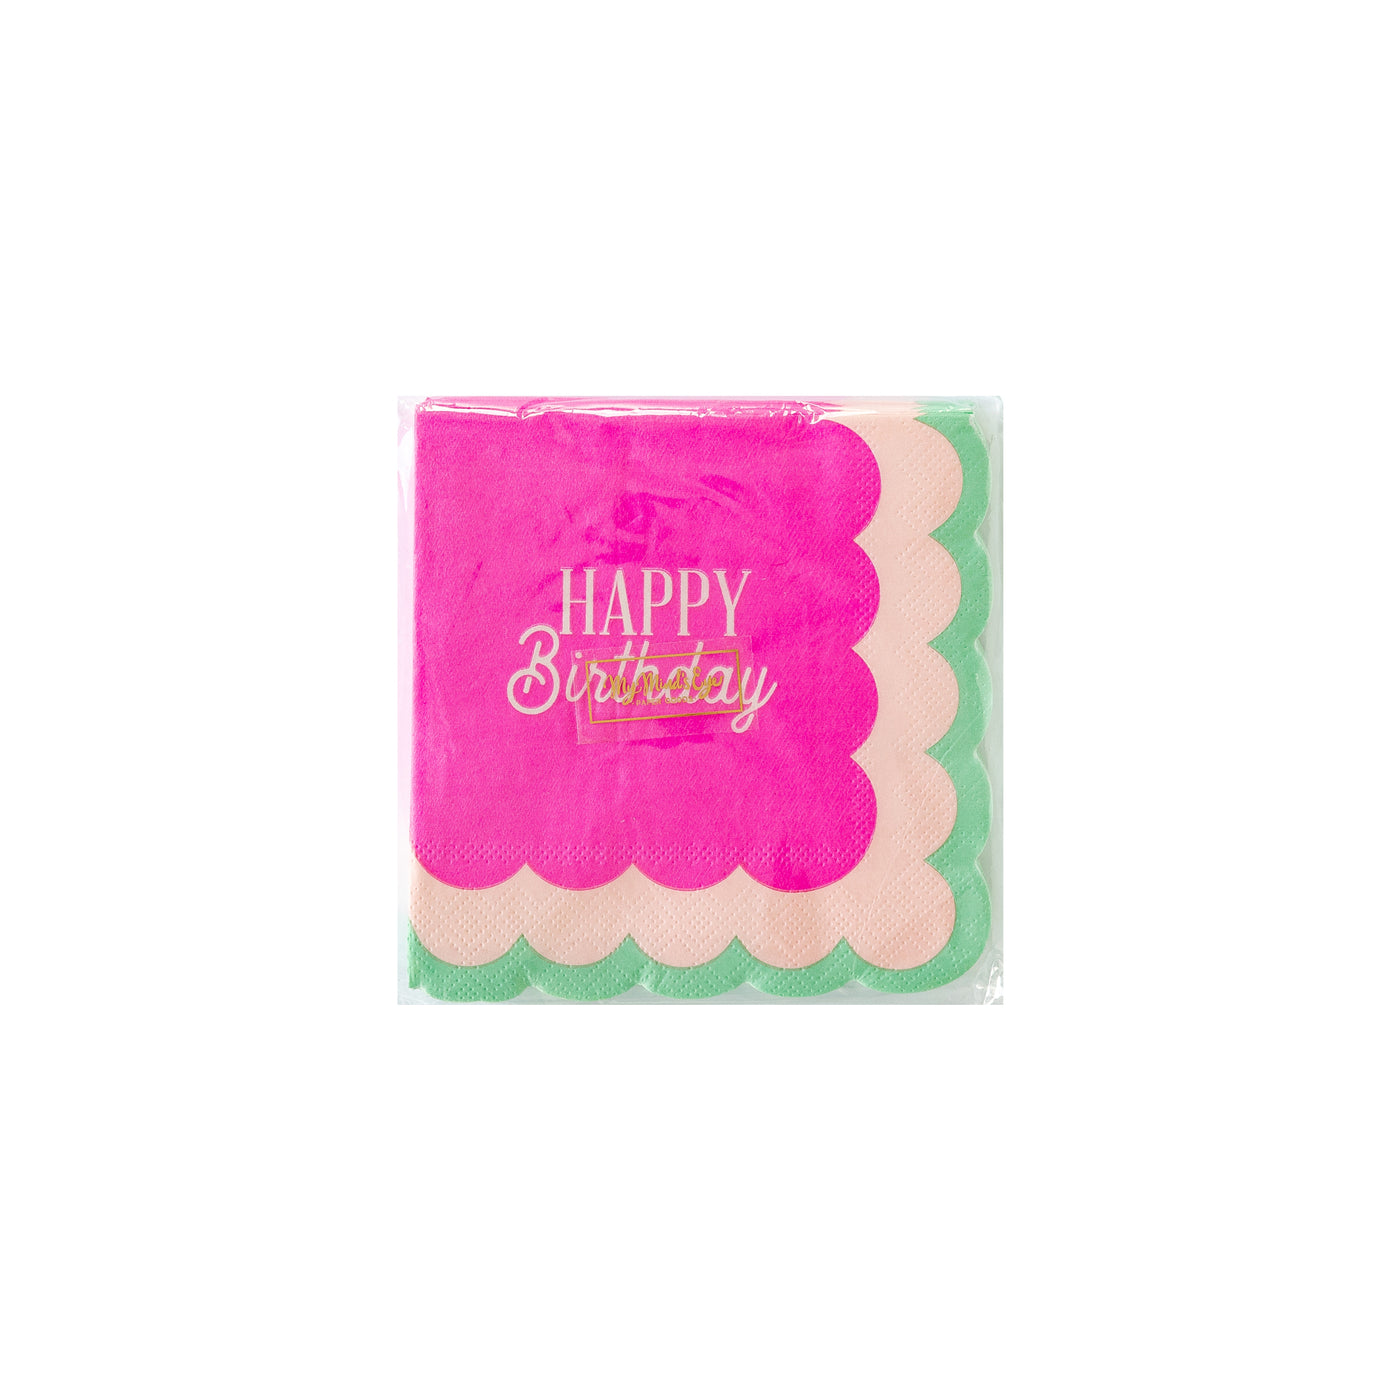 HBD938 - Pink Happy Birthday Cocktail Napkin